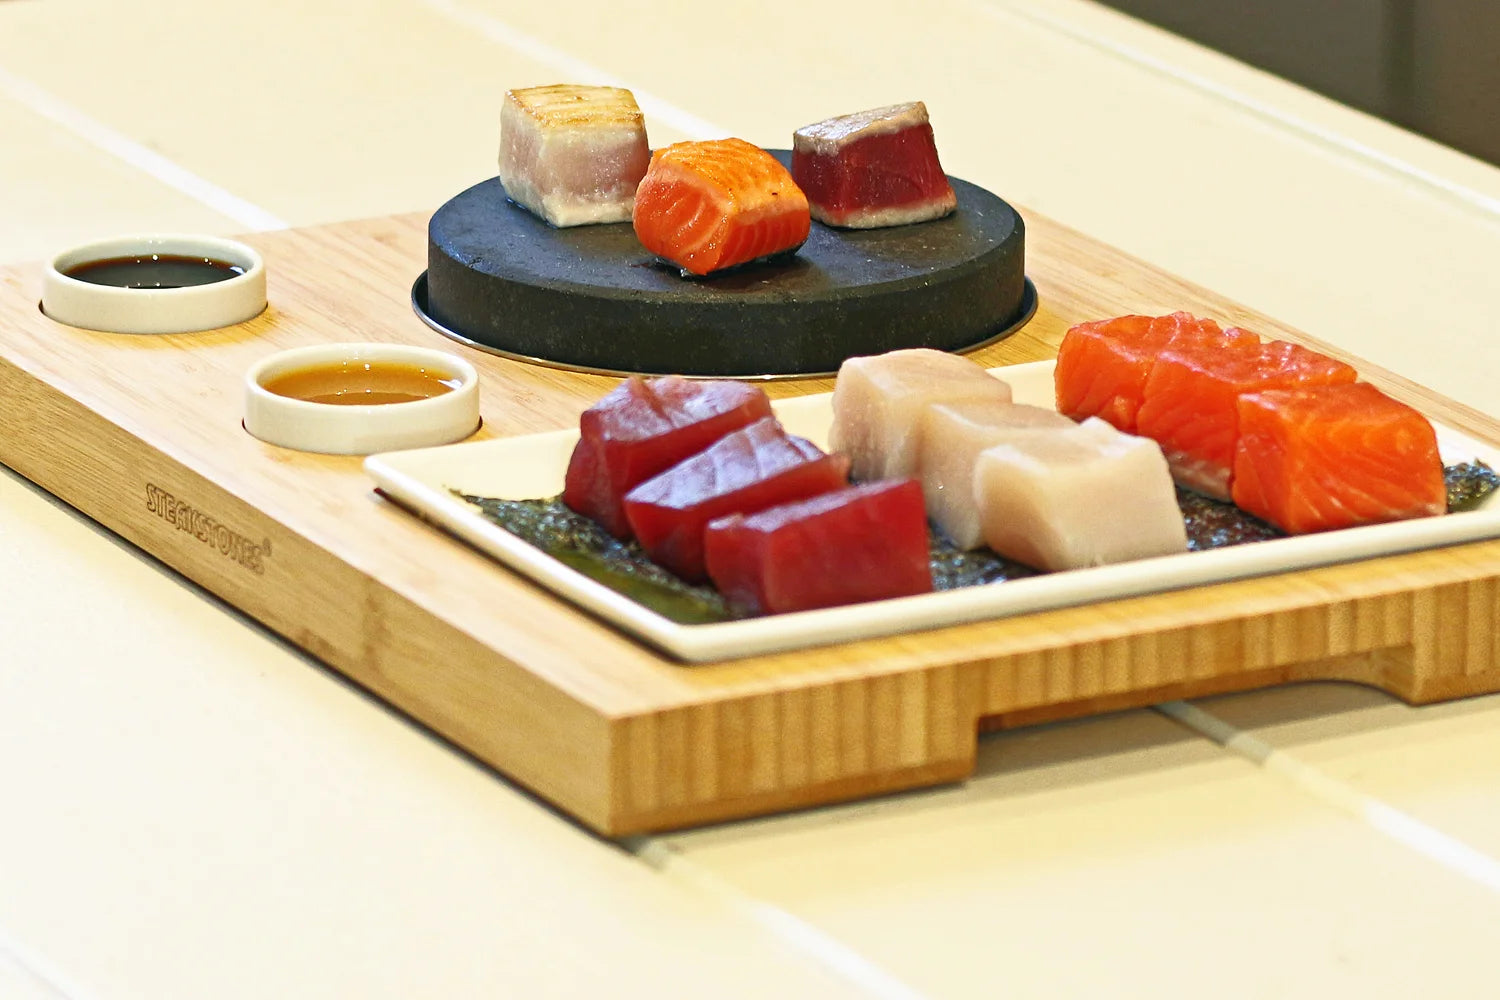 The Ishiyaki Set